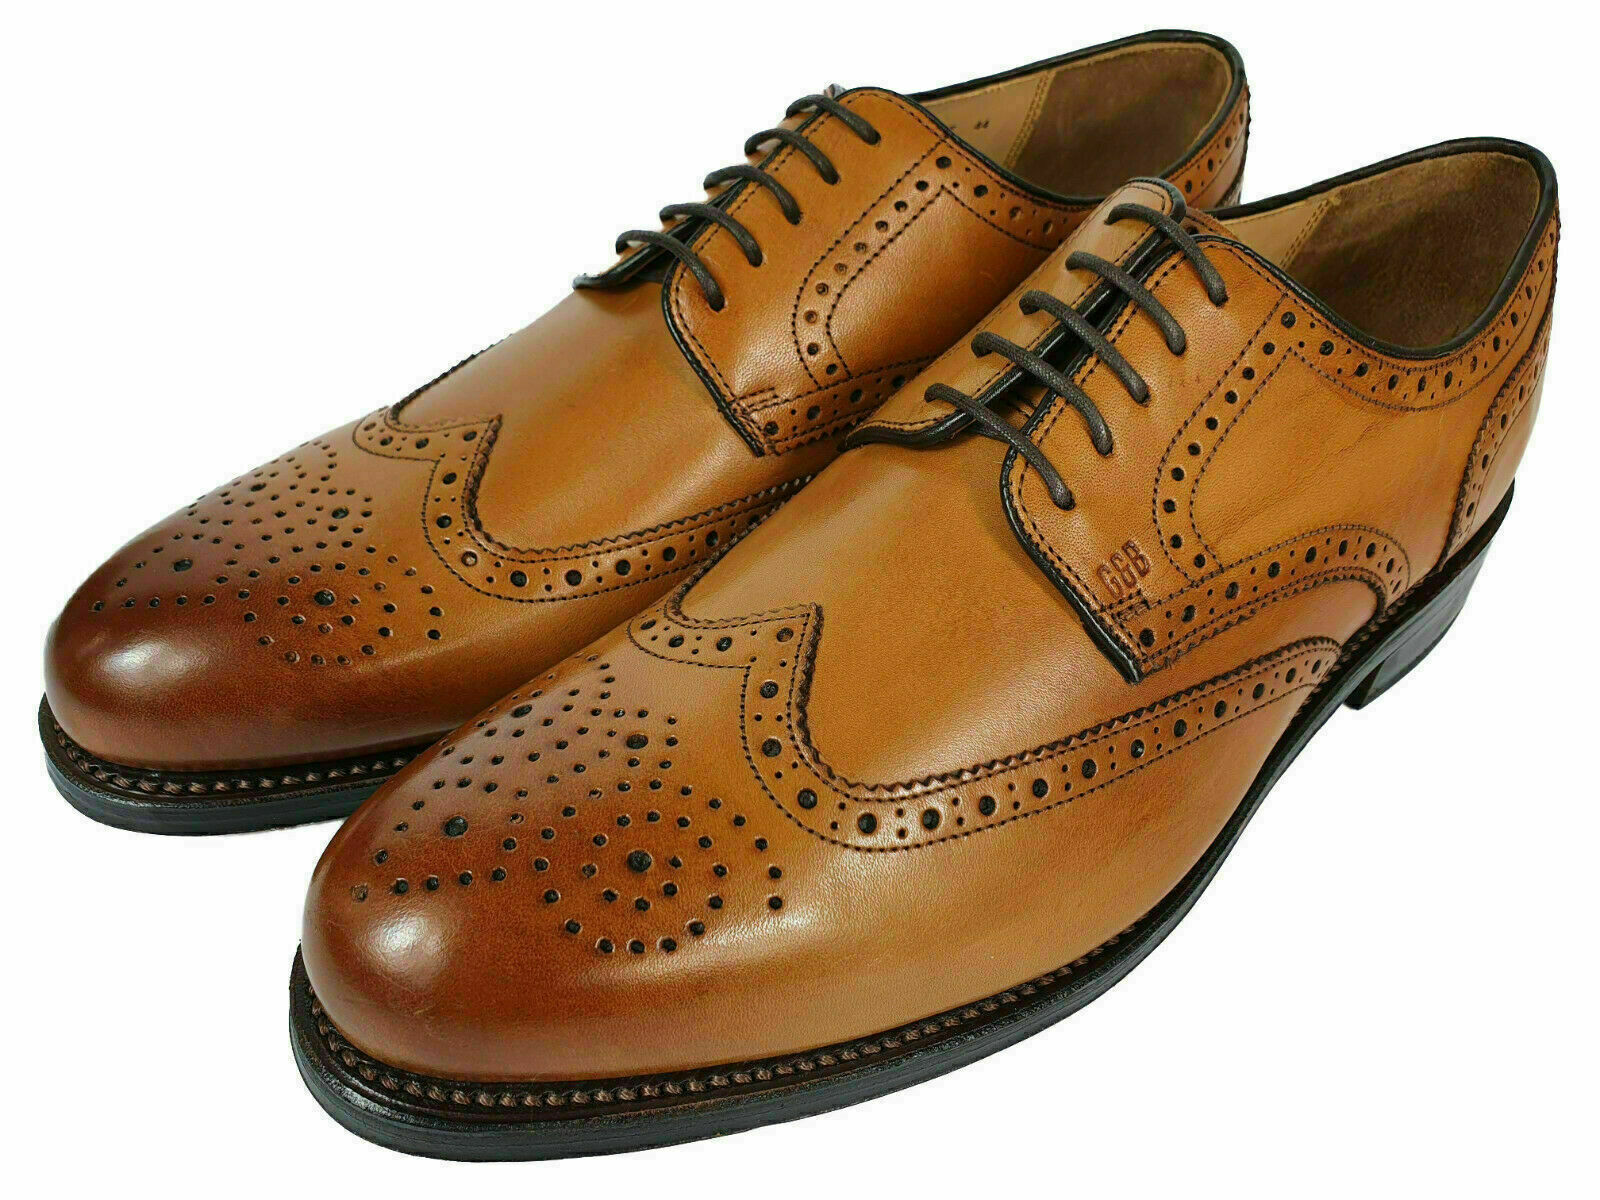 GORDON  BROS  Shoes  Gordon Bros Mens Formal Shoes  Poshmark